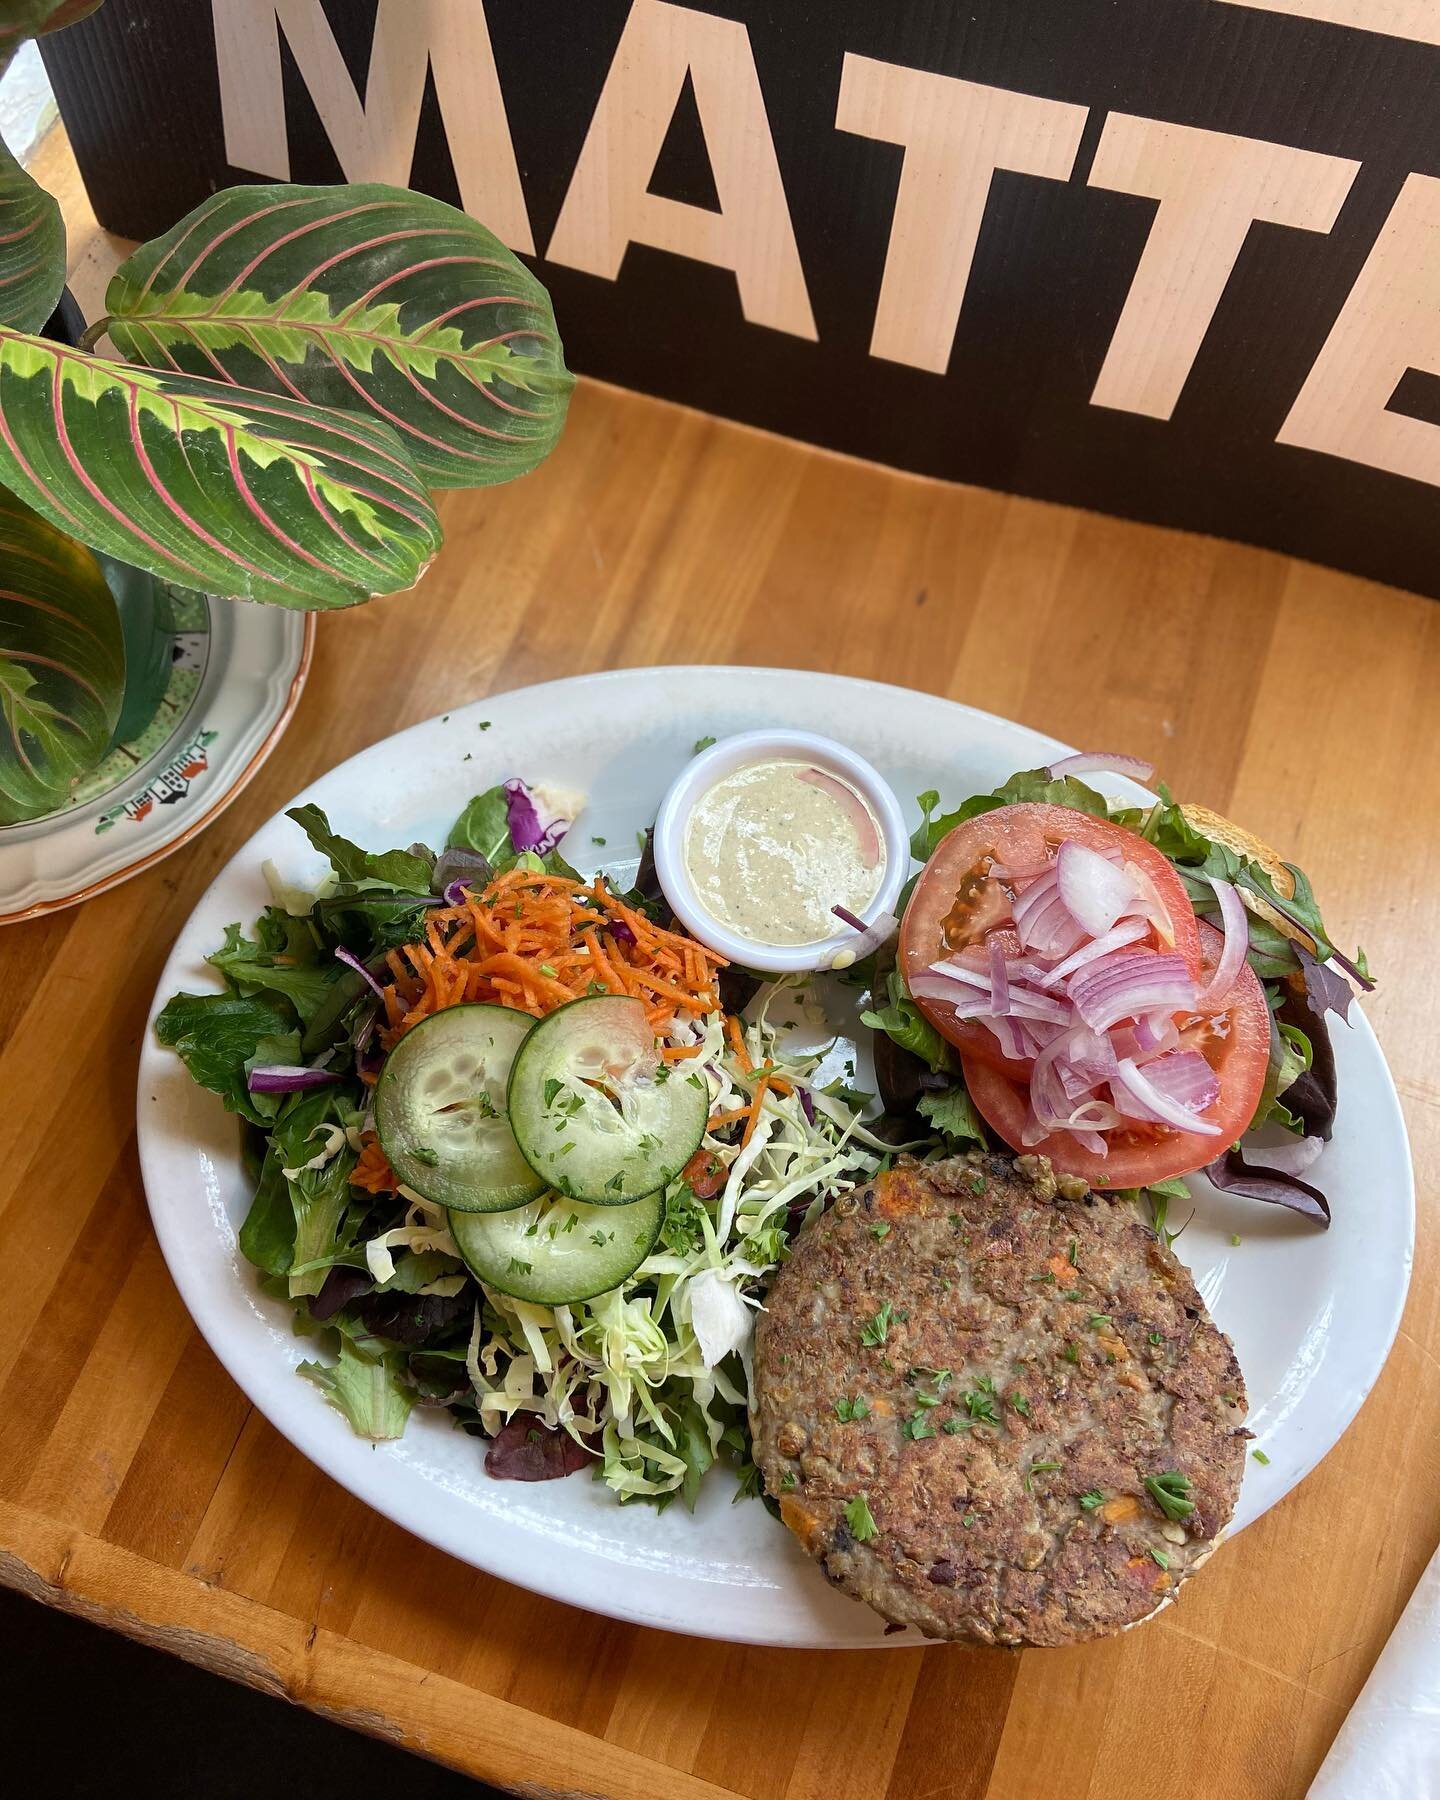 Check out this Organic Special - Our Savory Lentil Burger 😍

.
.
.
.
.
.
.
#eatarainbow #plantpowered #morningglorycafe #colorfulfood #luncheugene #eugenerestaurants #morningglorycafeeugene